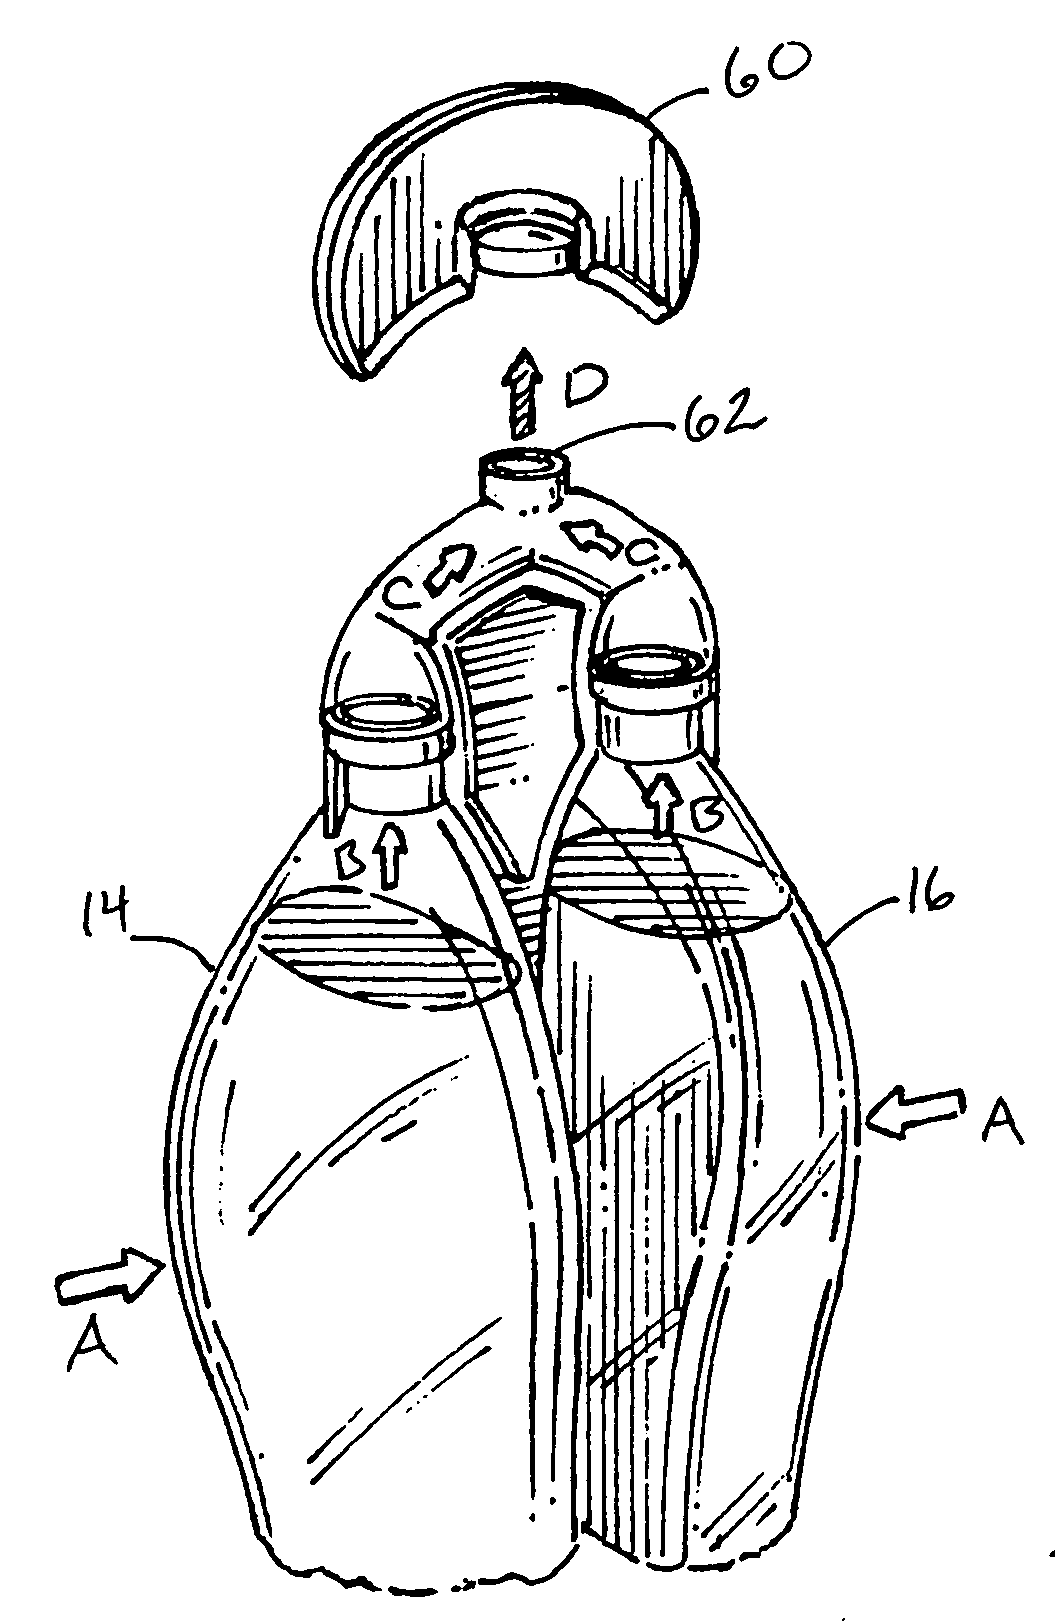 Multi-chambered drink bottle